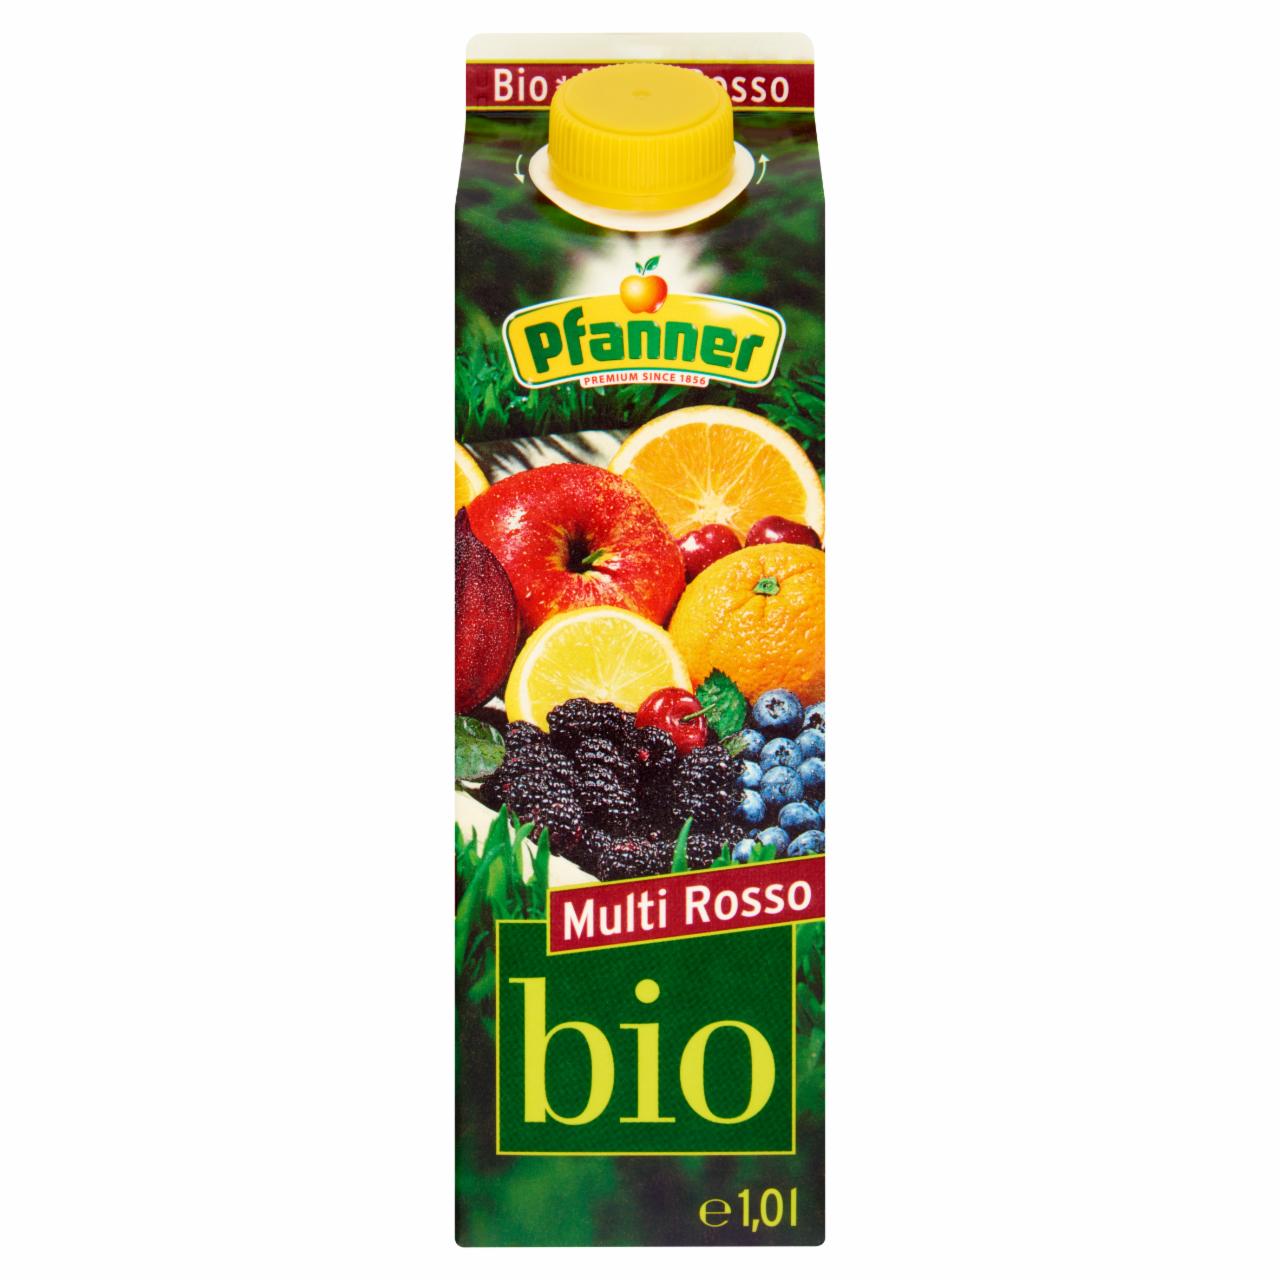 Képek - Pfanner Multi Rosso bio vegyes gyümölcsital bio vegyes gyümölcslé- és bio céklalé-sűrítményből 1 l